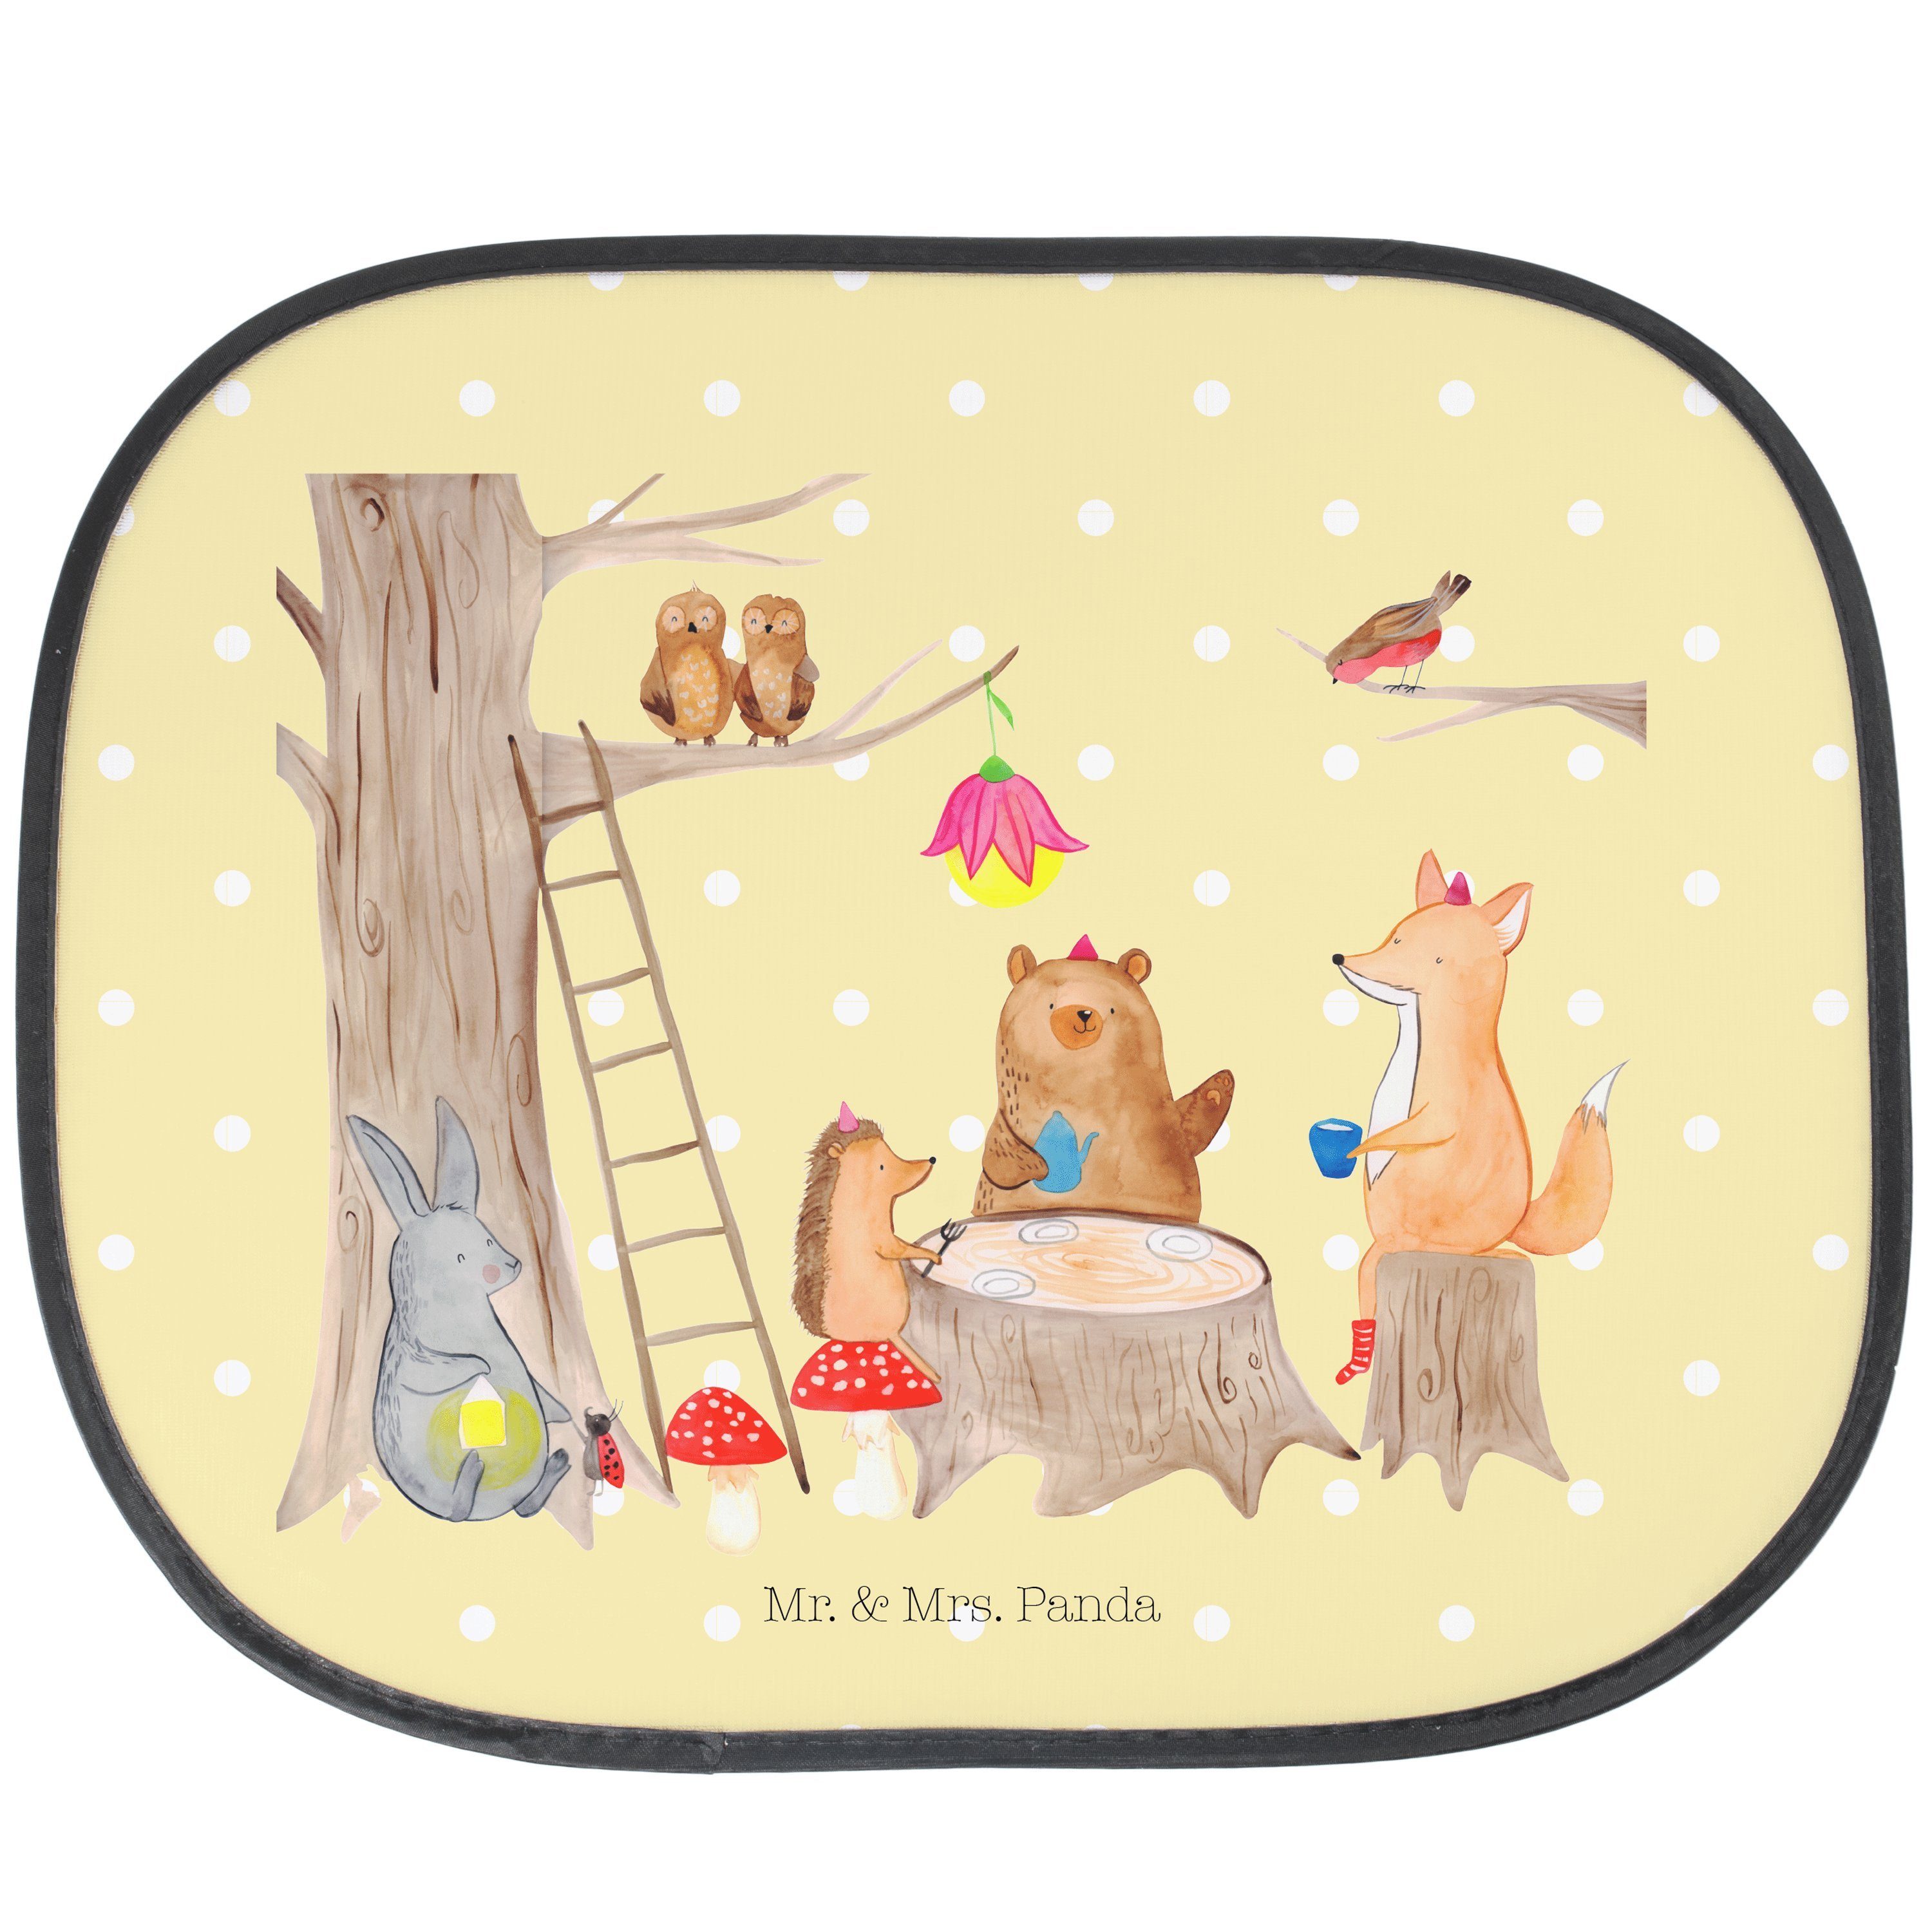 Sonnenschutz Waldtiere Picknick - Gelb Pastell - Geschenk, Auto Sonnenschutz,  Hase, Mr. & Mrs. Panda, Seidenmatt, Farbecht